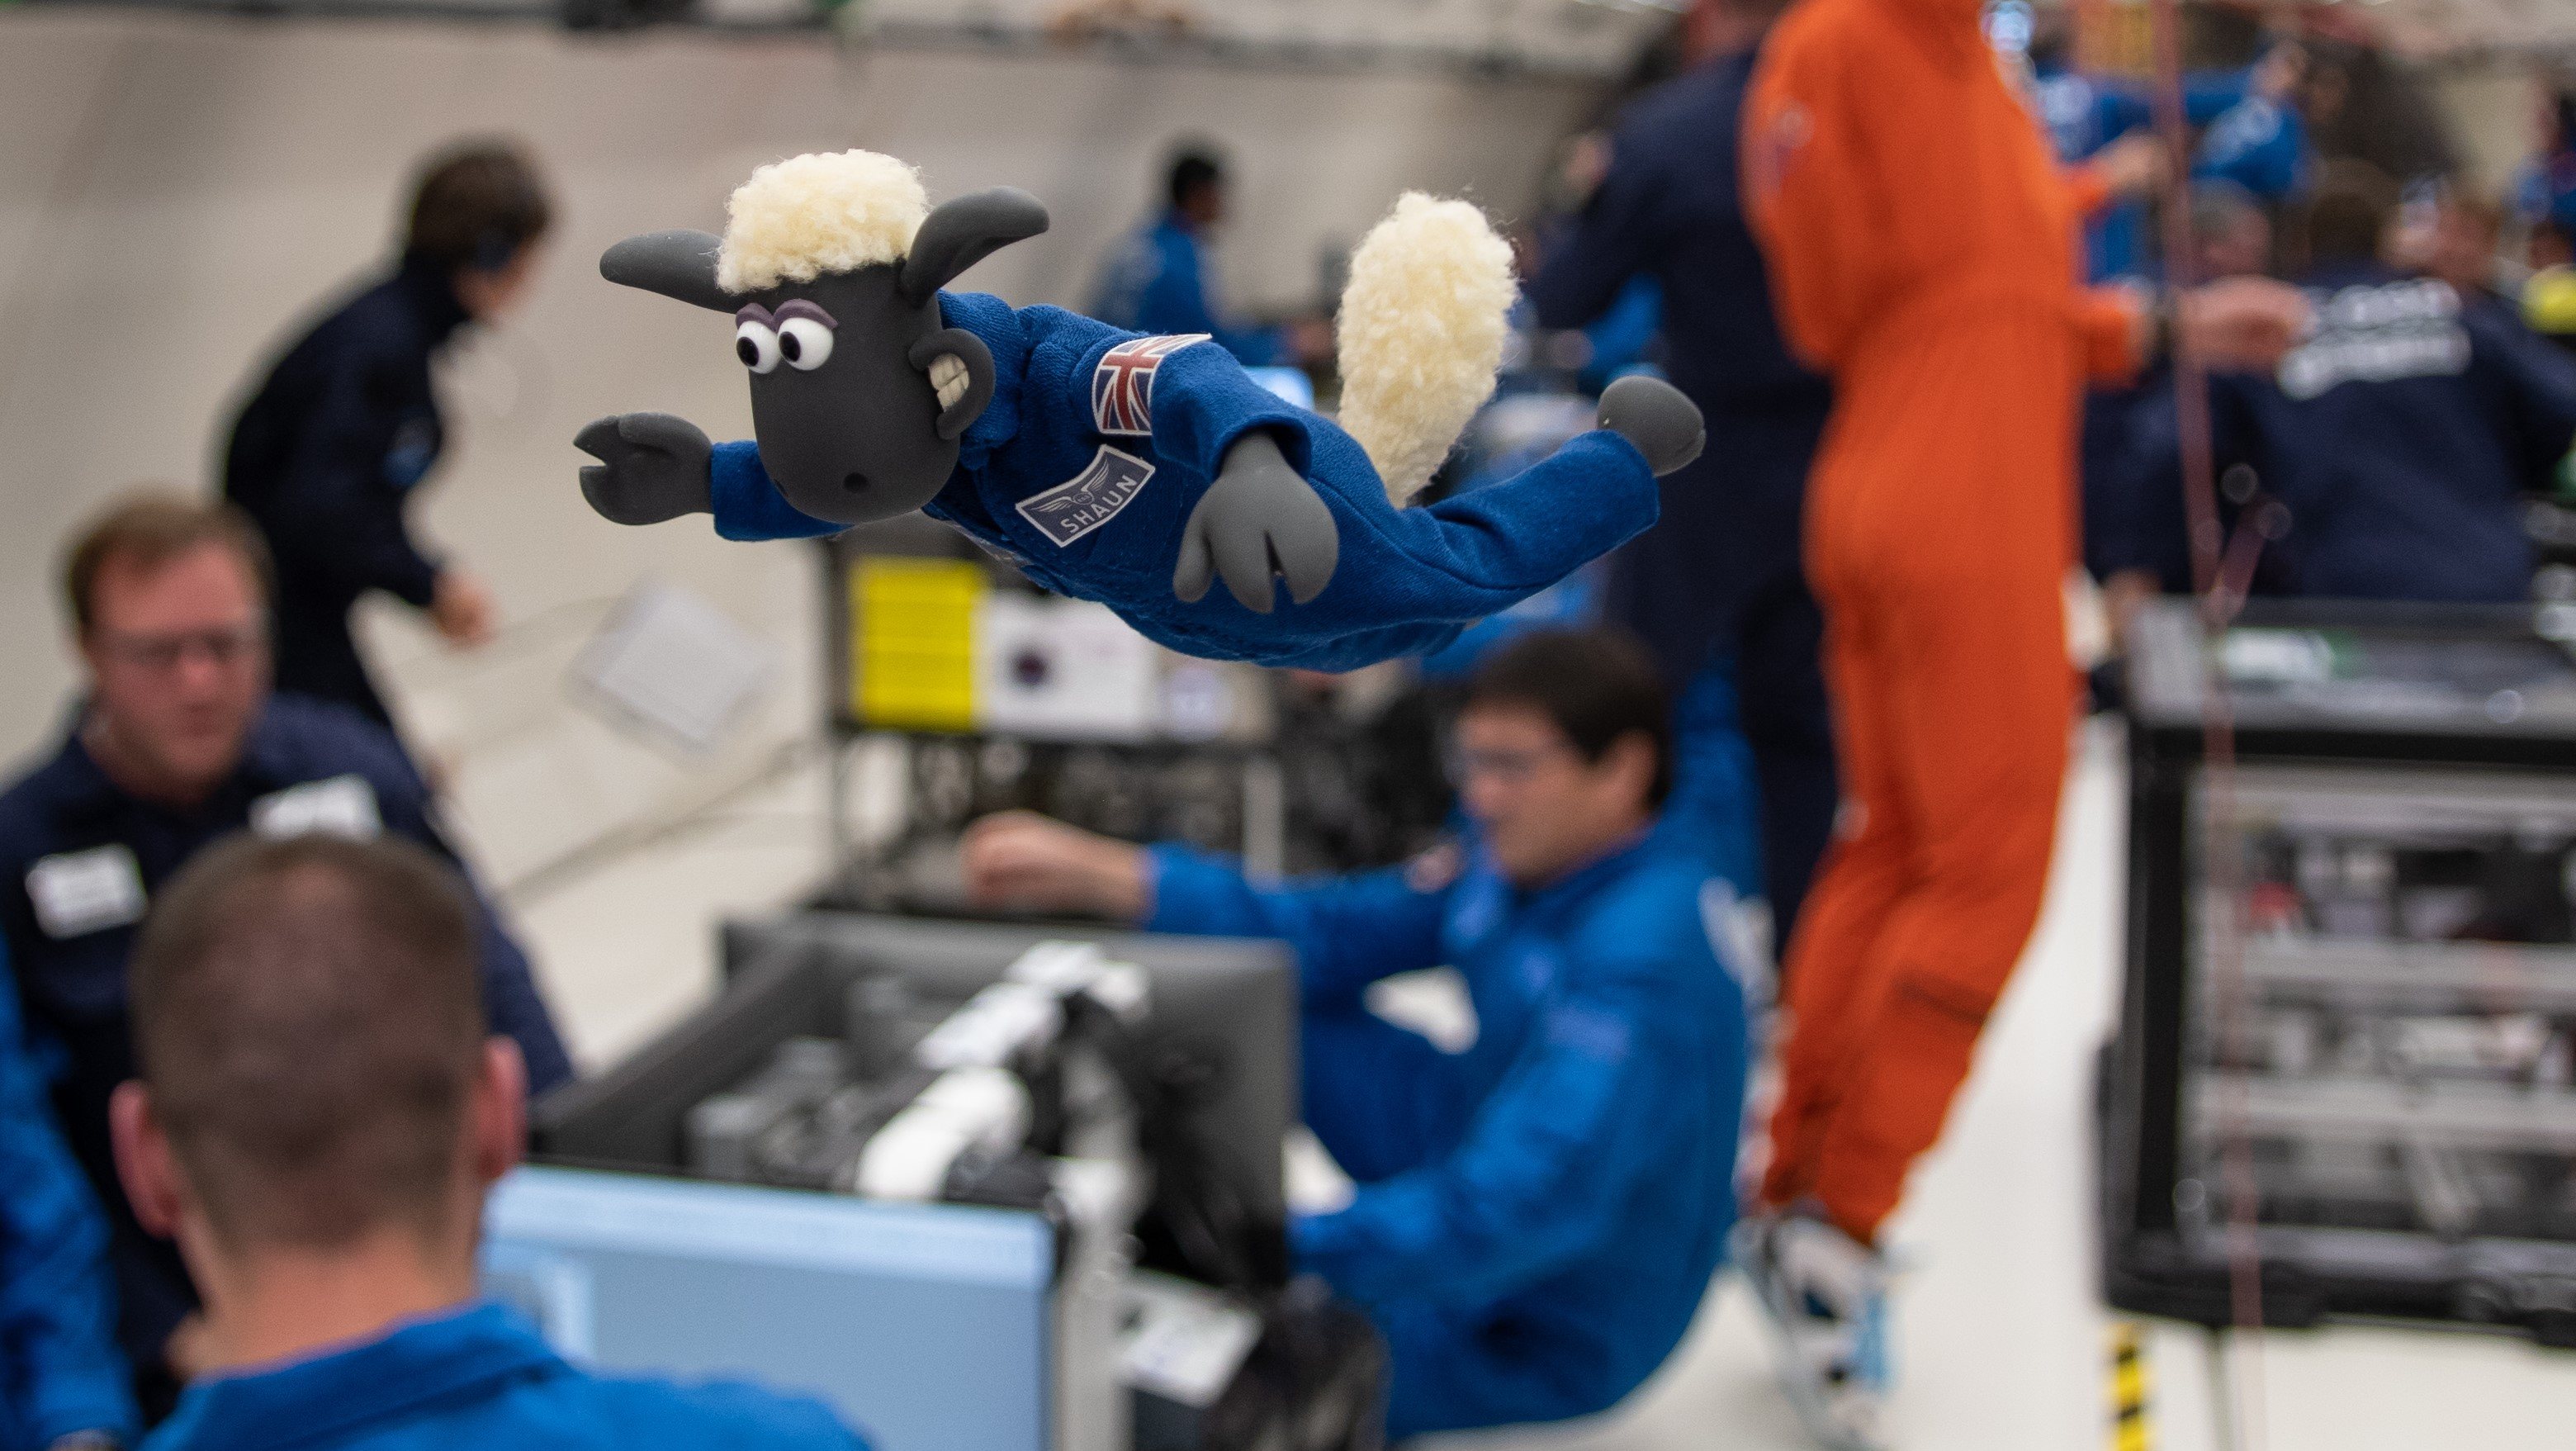 Shaun_the_Sheep_experiencing_microgravity_on_ESA_parabolic_flight